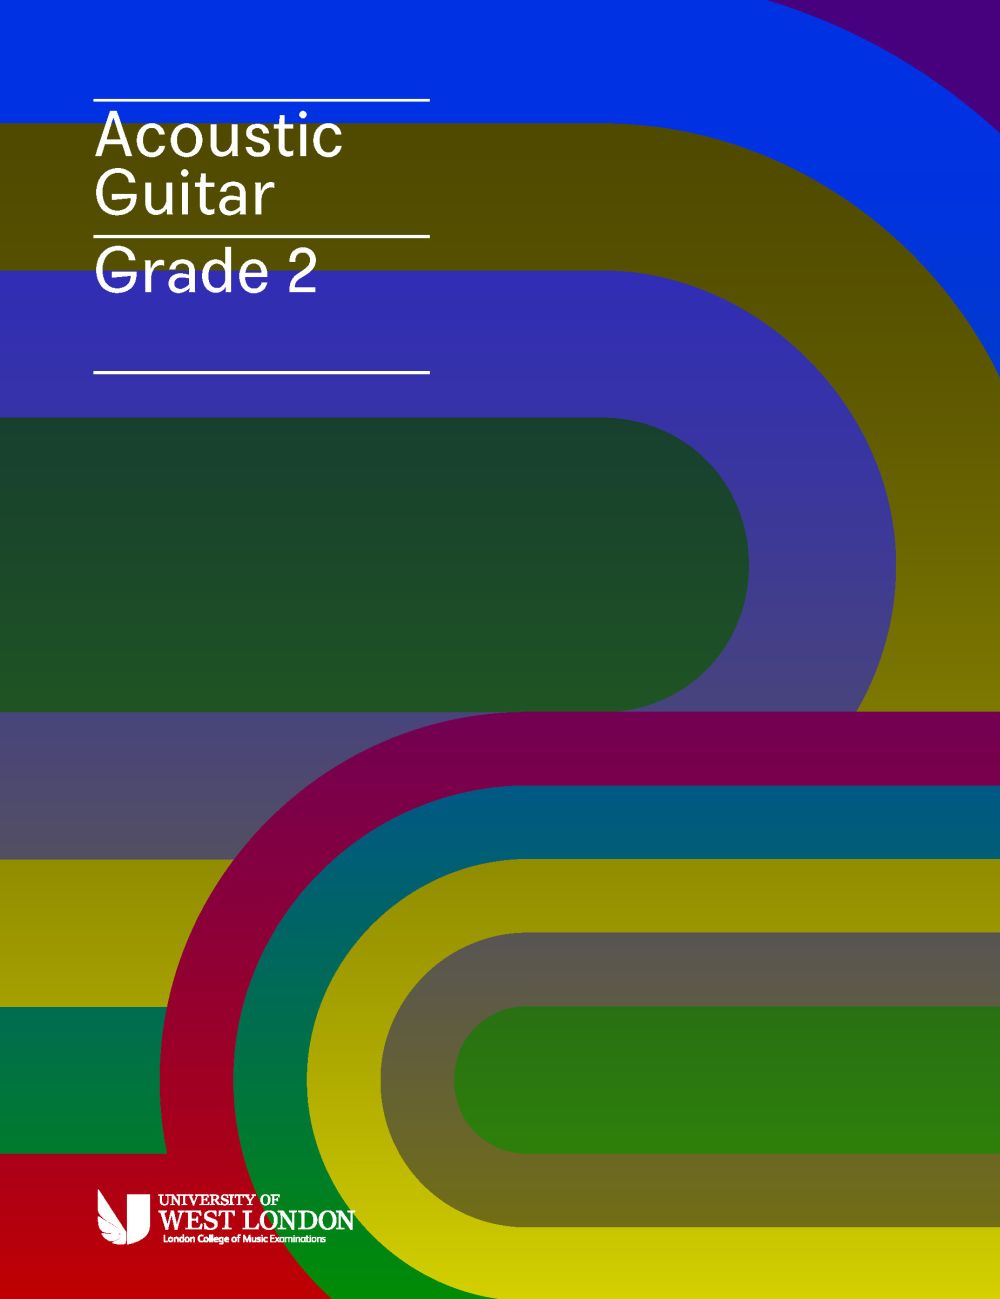 LCM Acoustic Guitar Handbook Grade 2 2020: Acoustic Guitar: Instrumental Tutor